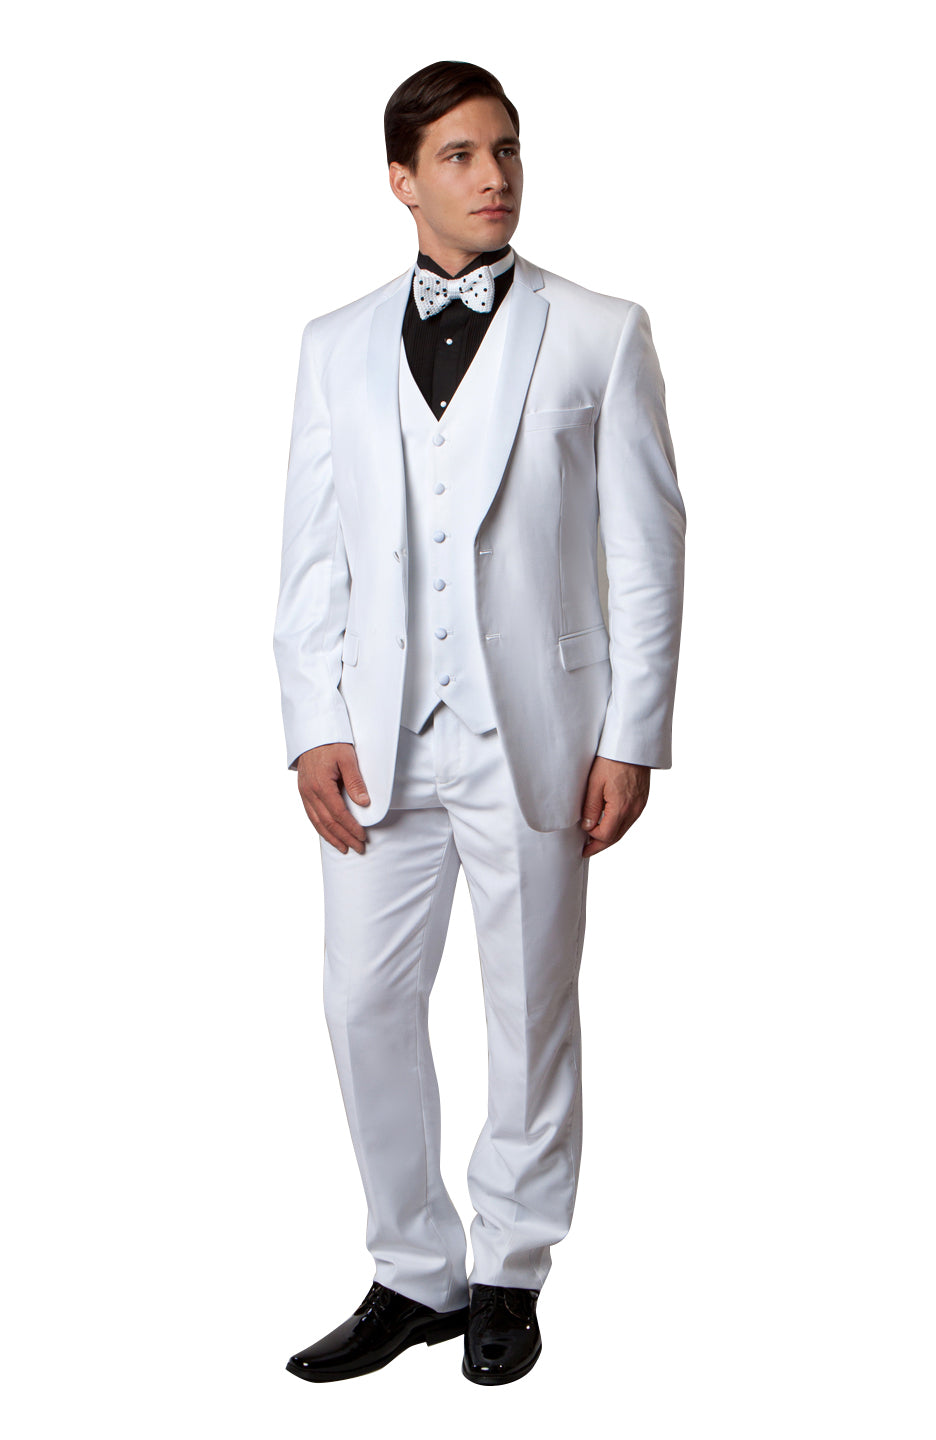 Black / Black Satin Bryan Michaels Solid Notch Lapel Tuxedo Solid Slim Fit Prom Tuxedo For Men MT400-01 - Hattitude